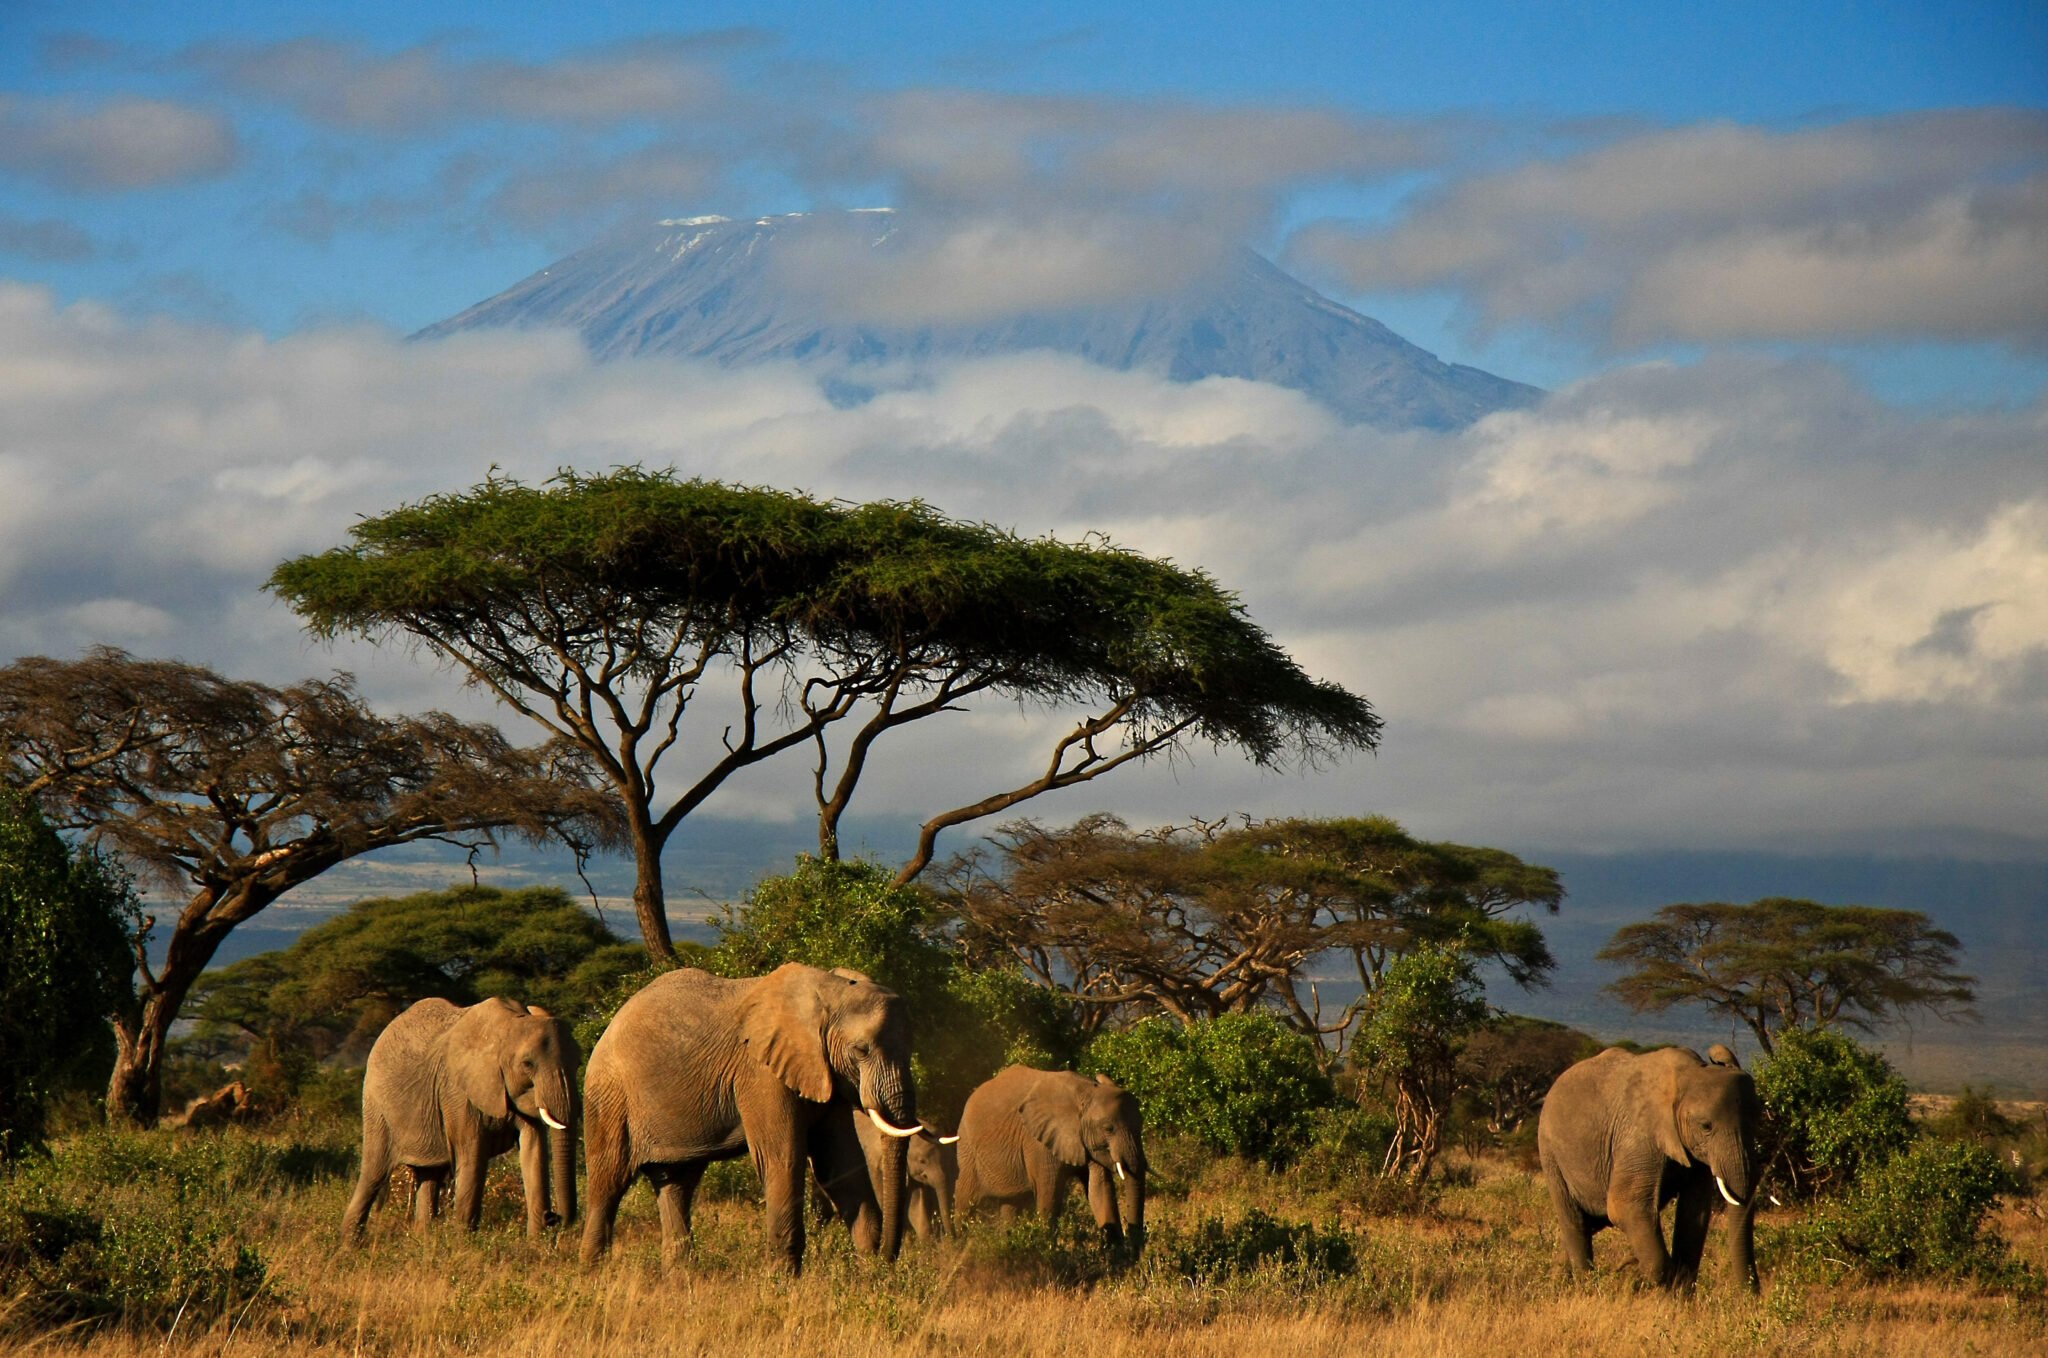 Elephant family in front of Mt. Kilimanjaro, kenya